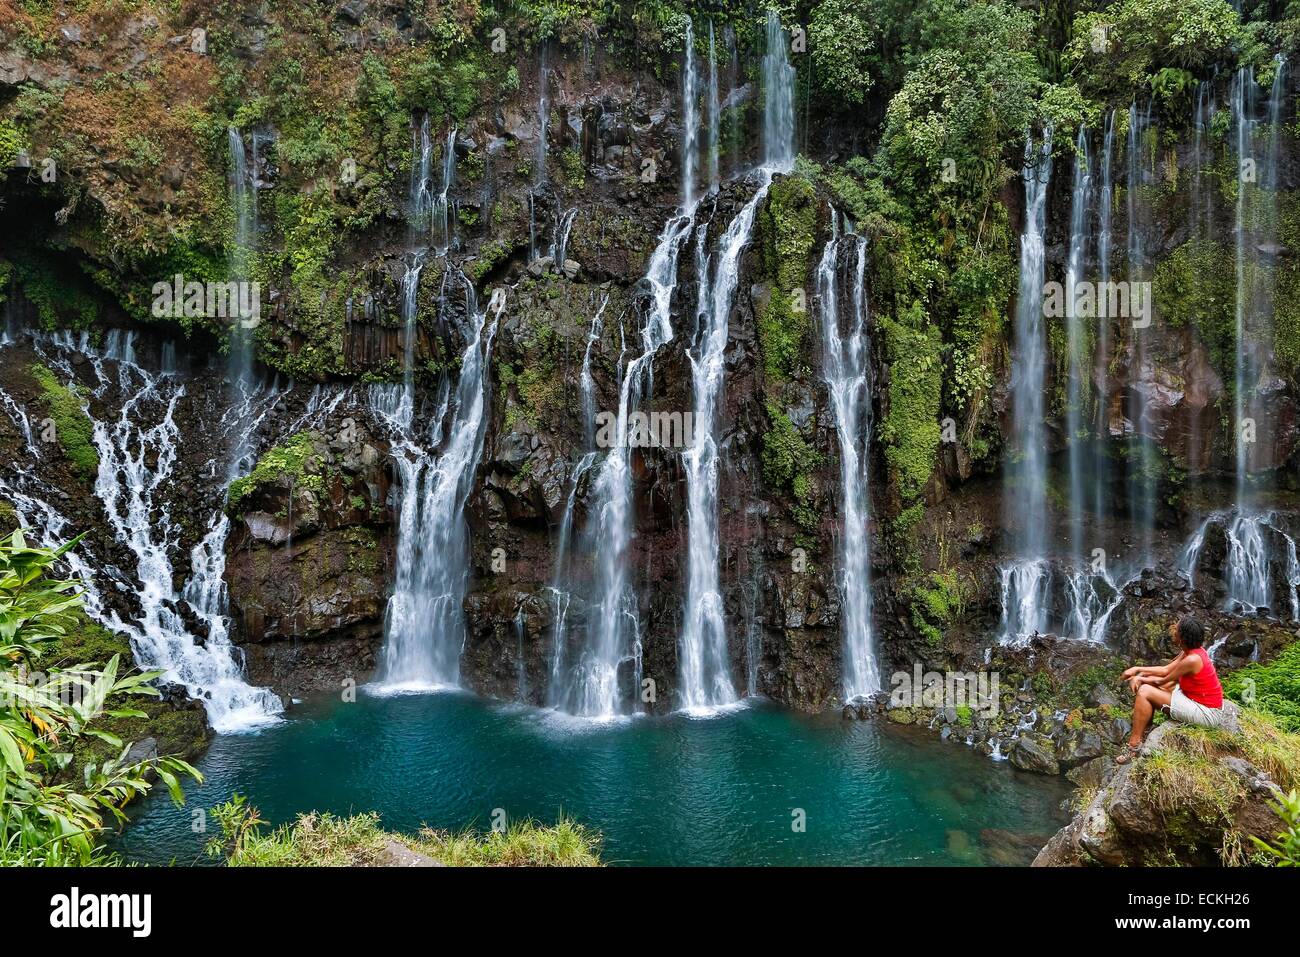 France, Reunion Island, Parc National de la Reunion (Reunion National Park) listed as World Heritage by UNESCO, Saint Joseph, Langevin river, scenic waterfalls flowing into a basin Stock Photo